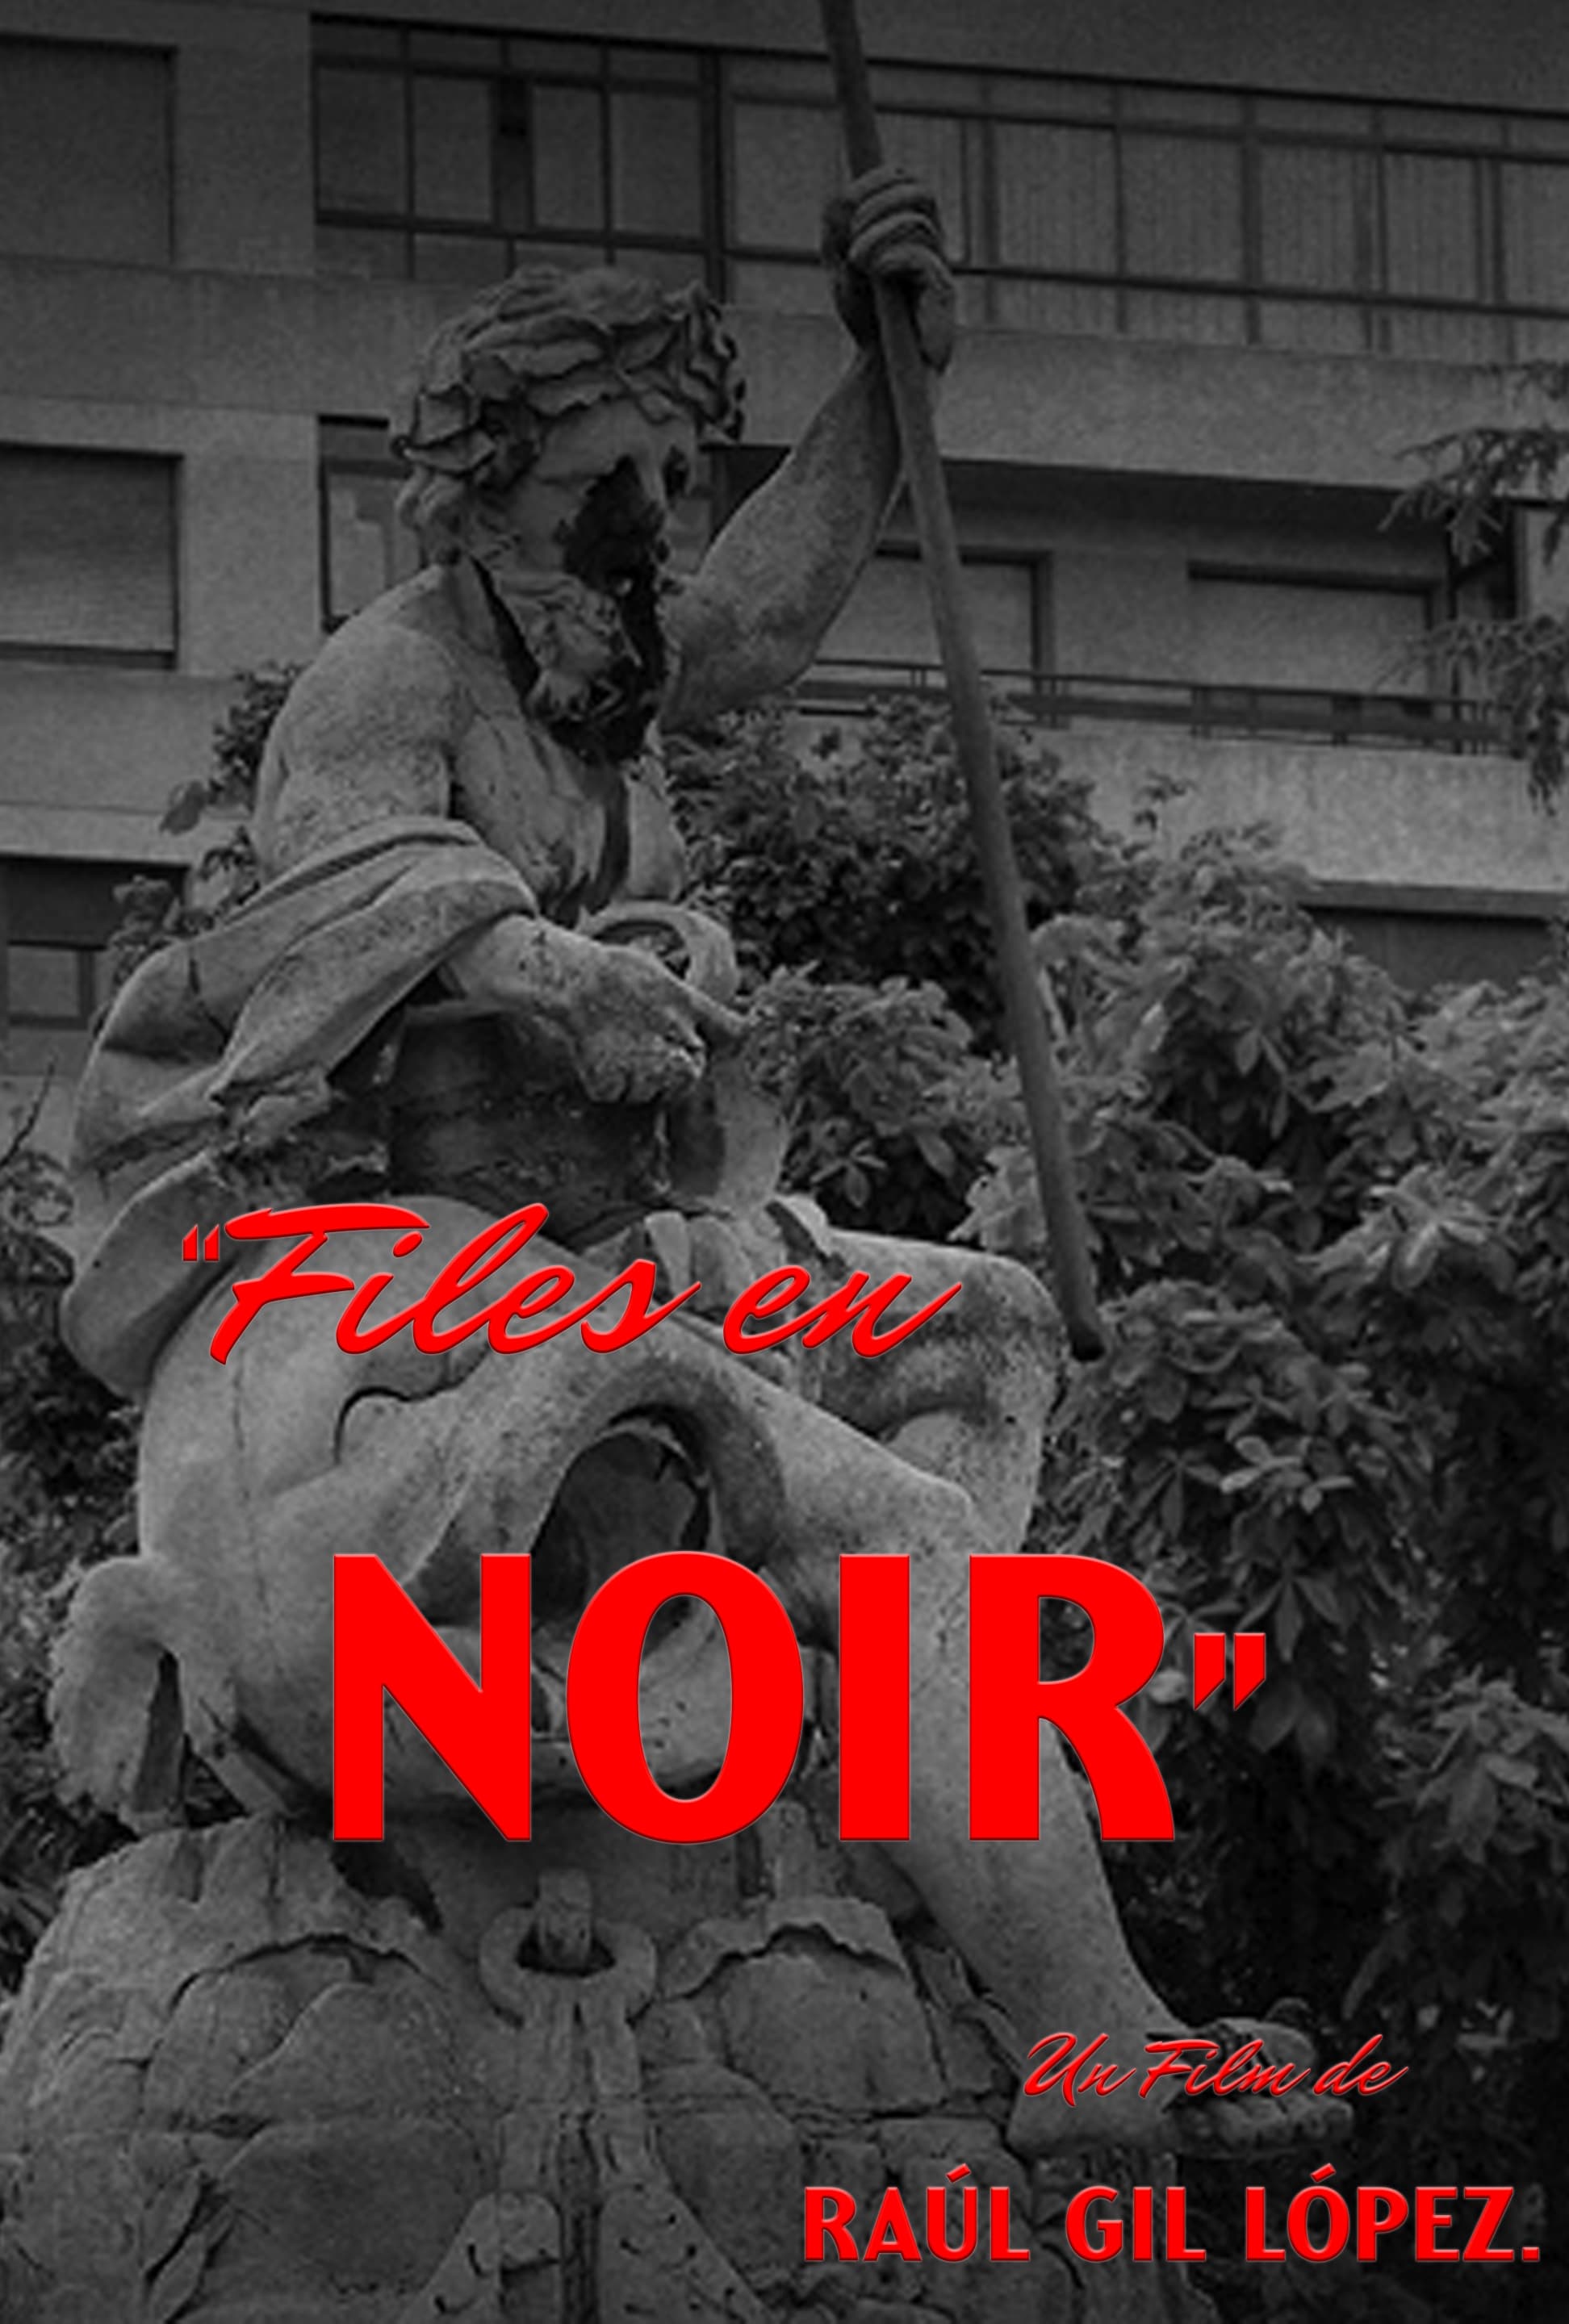 "Files en NOIR." (1967-Rip)